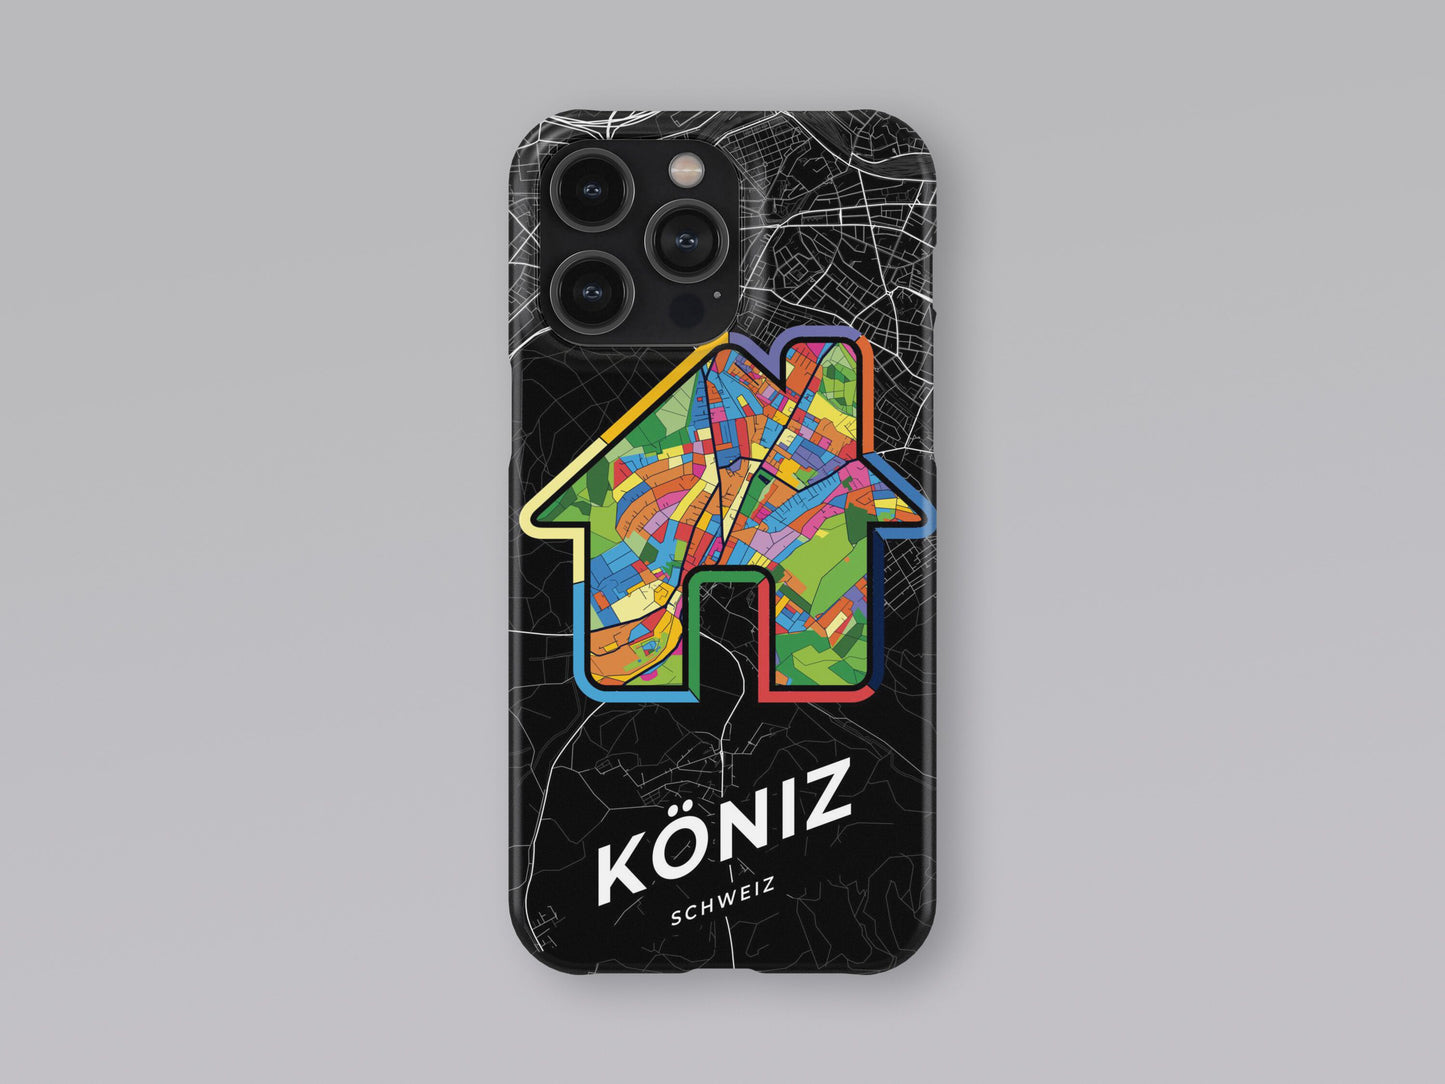 Köniz Switzerland slim phone case with colorful icon. Birthday, wedding or housewarming gift. Couple match cases. 3